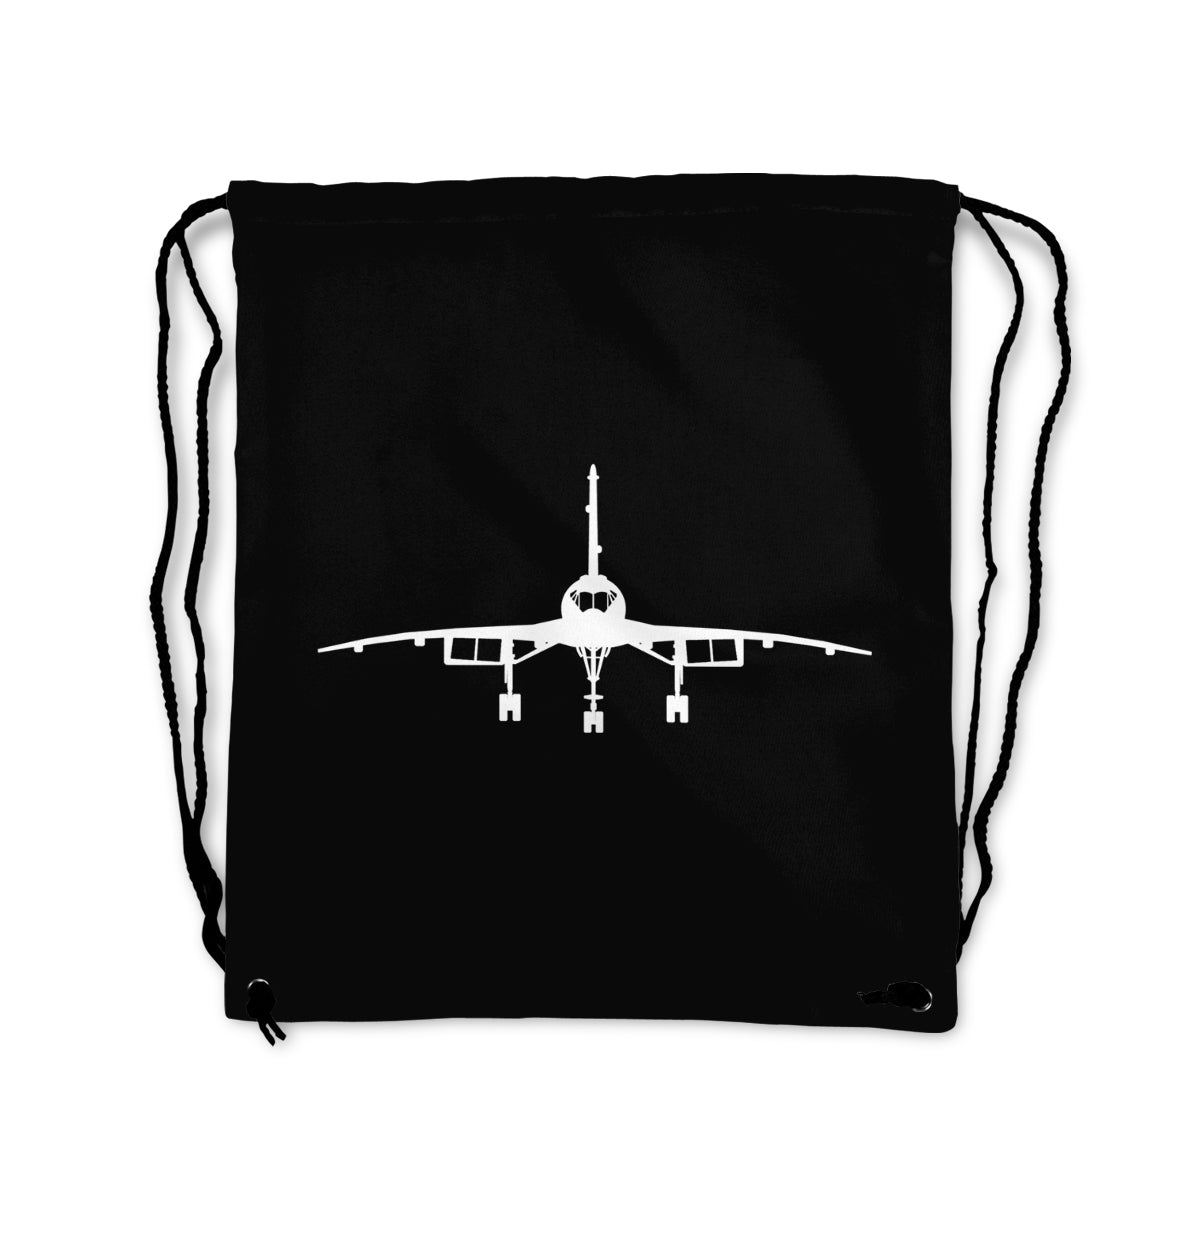 Concorde Silhouette Designed Drawstring Bags